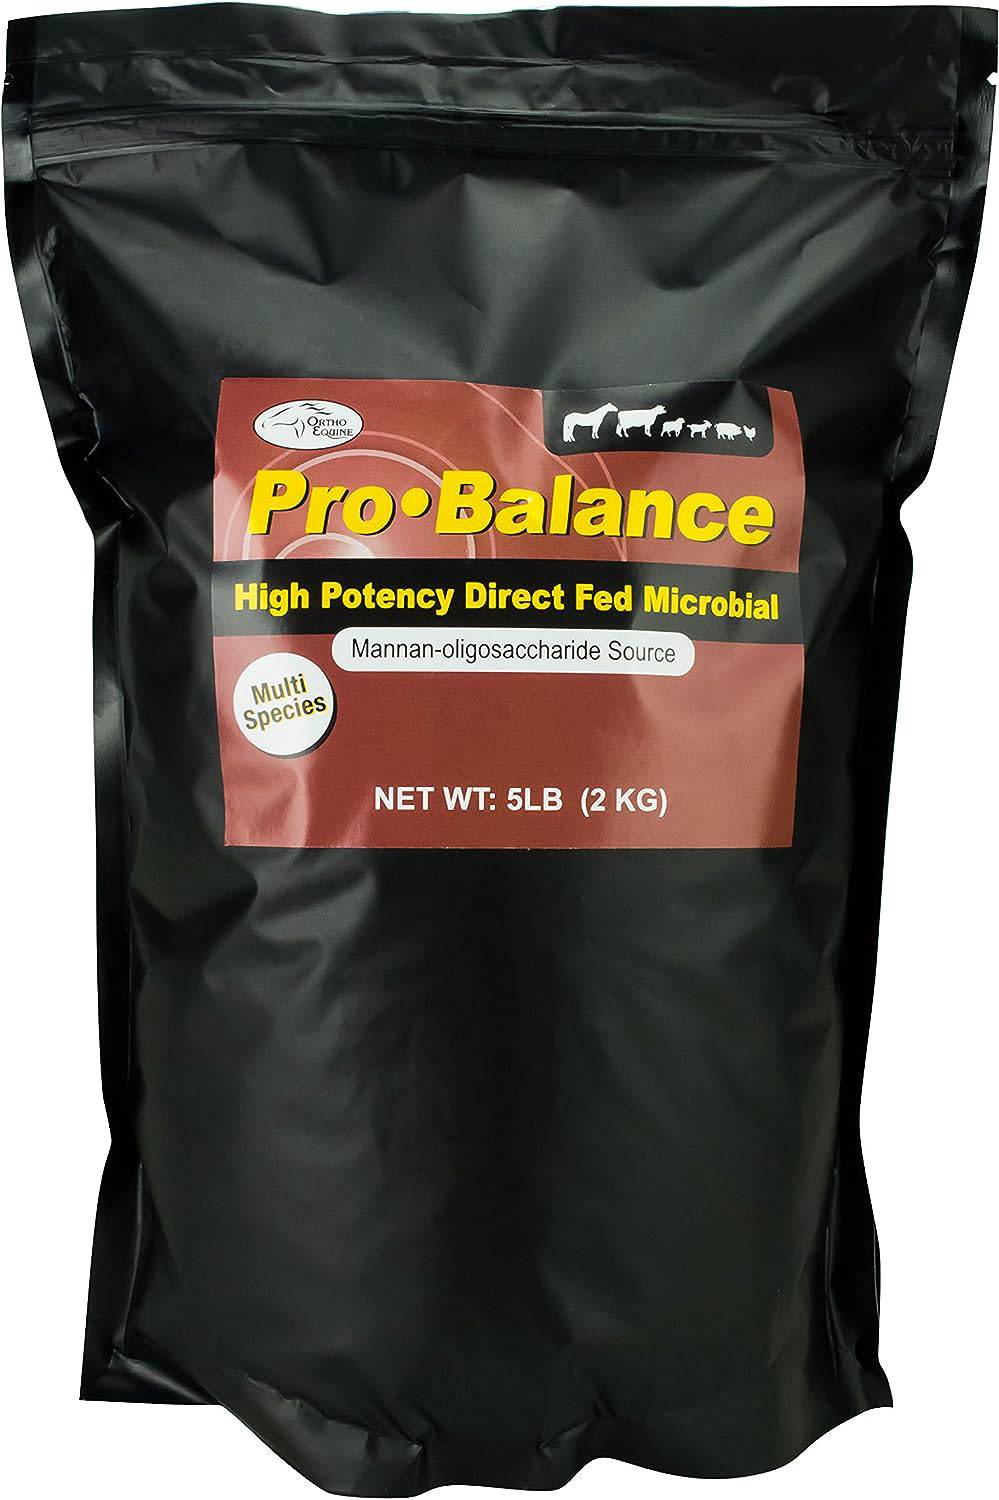 Pro Balance Daily Probiotic - Multi Species - 5lb